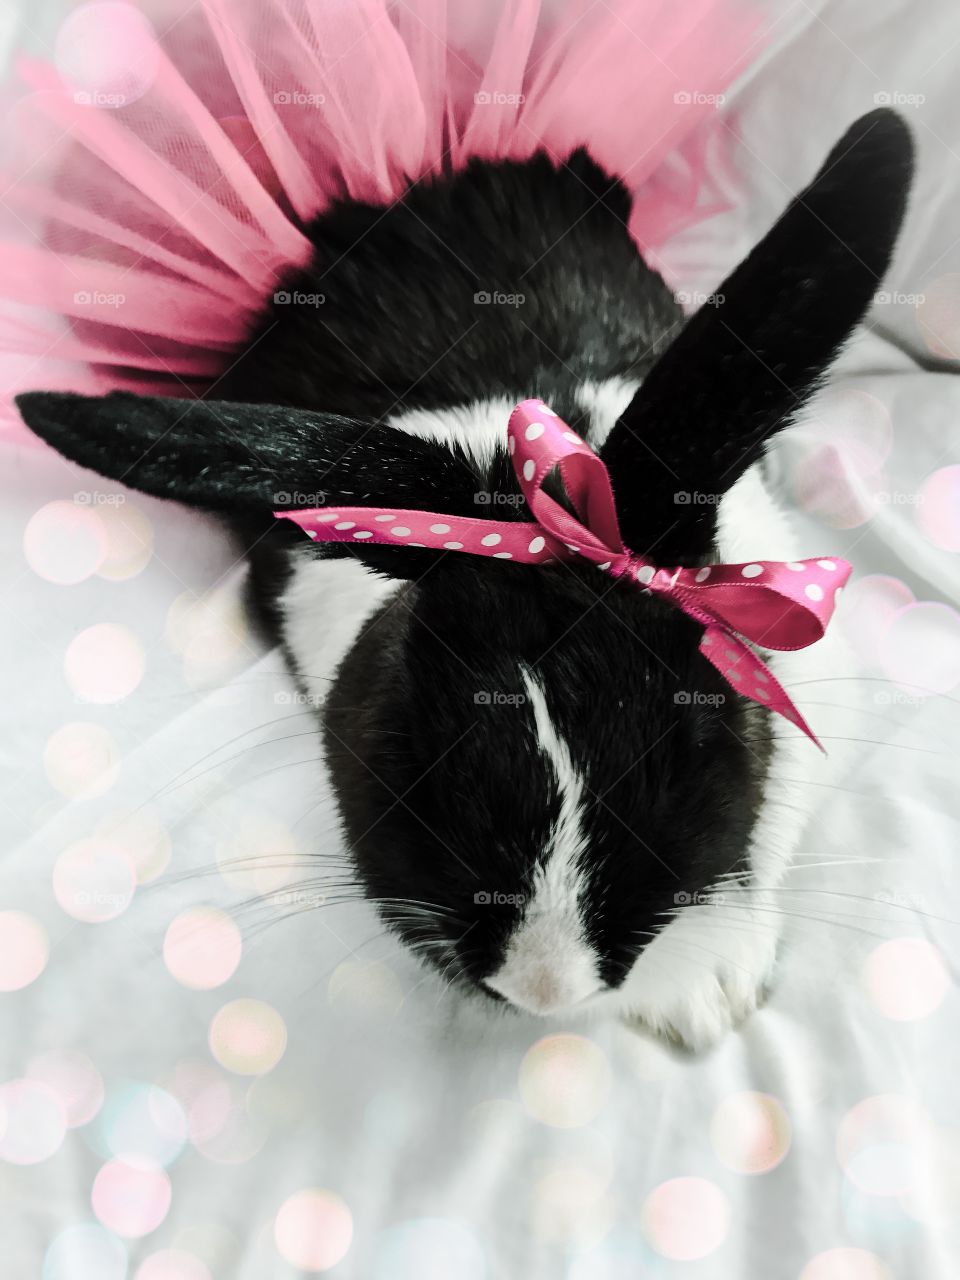 Ballerina bunny being pretty 